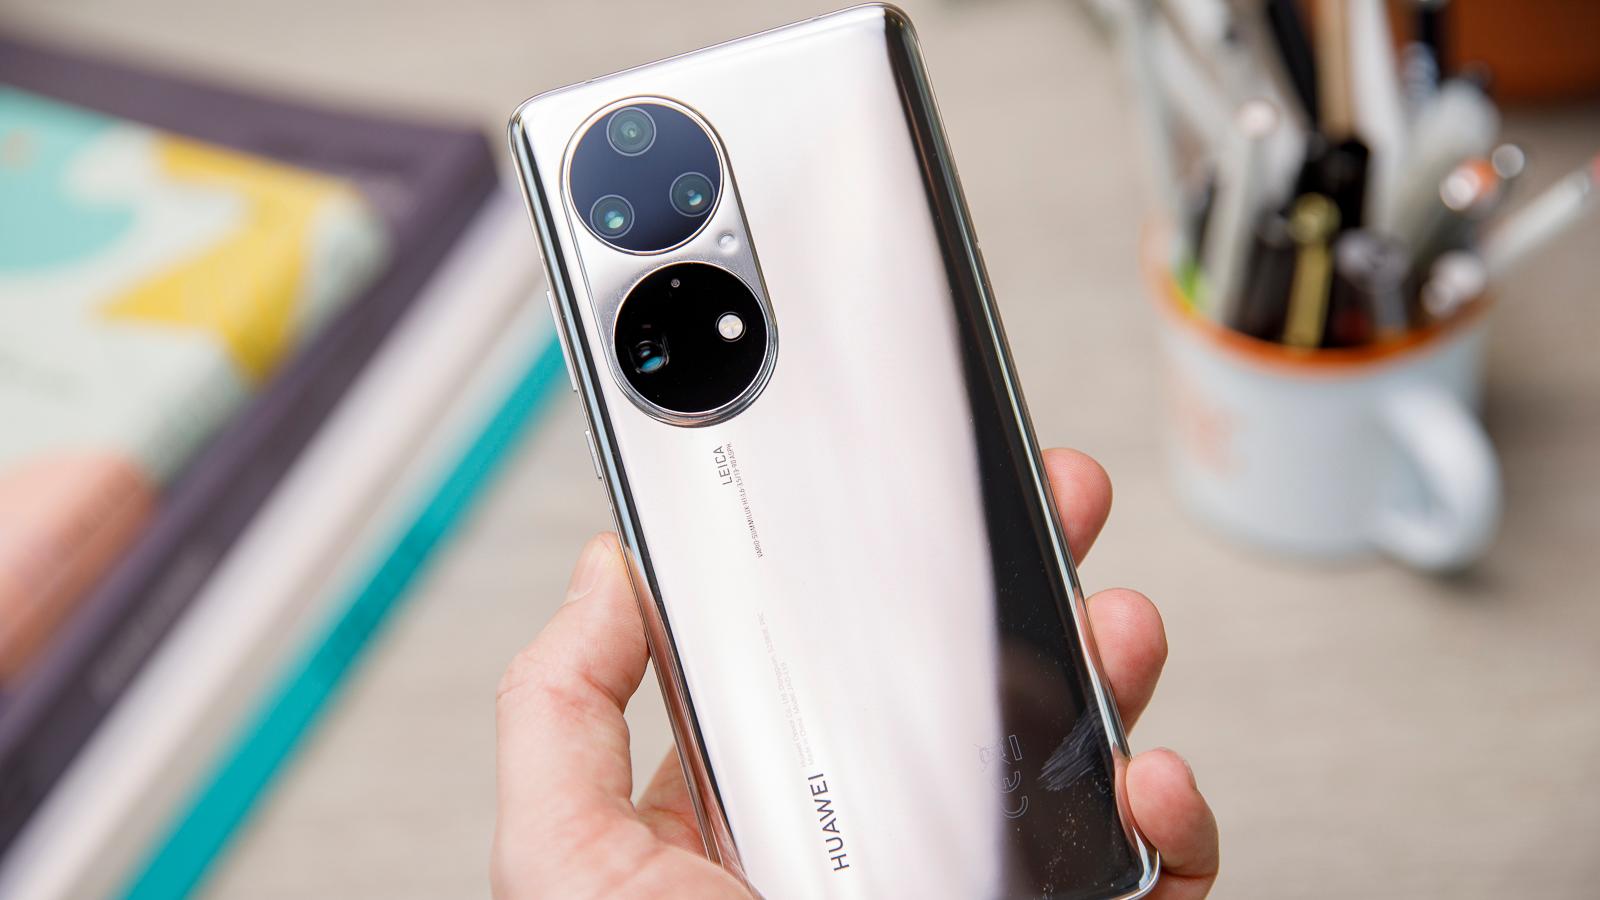 Atumtek Premium Pro 51-inch Phone Tripod Selfie Stick  Phone tripod,  Magnetic phone holder, Cable lightning